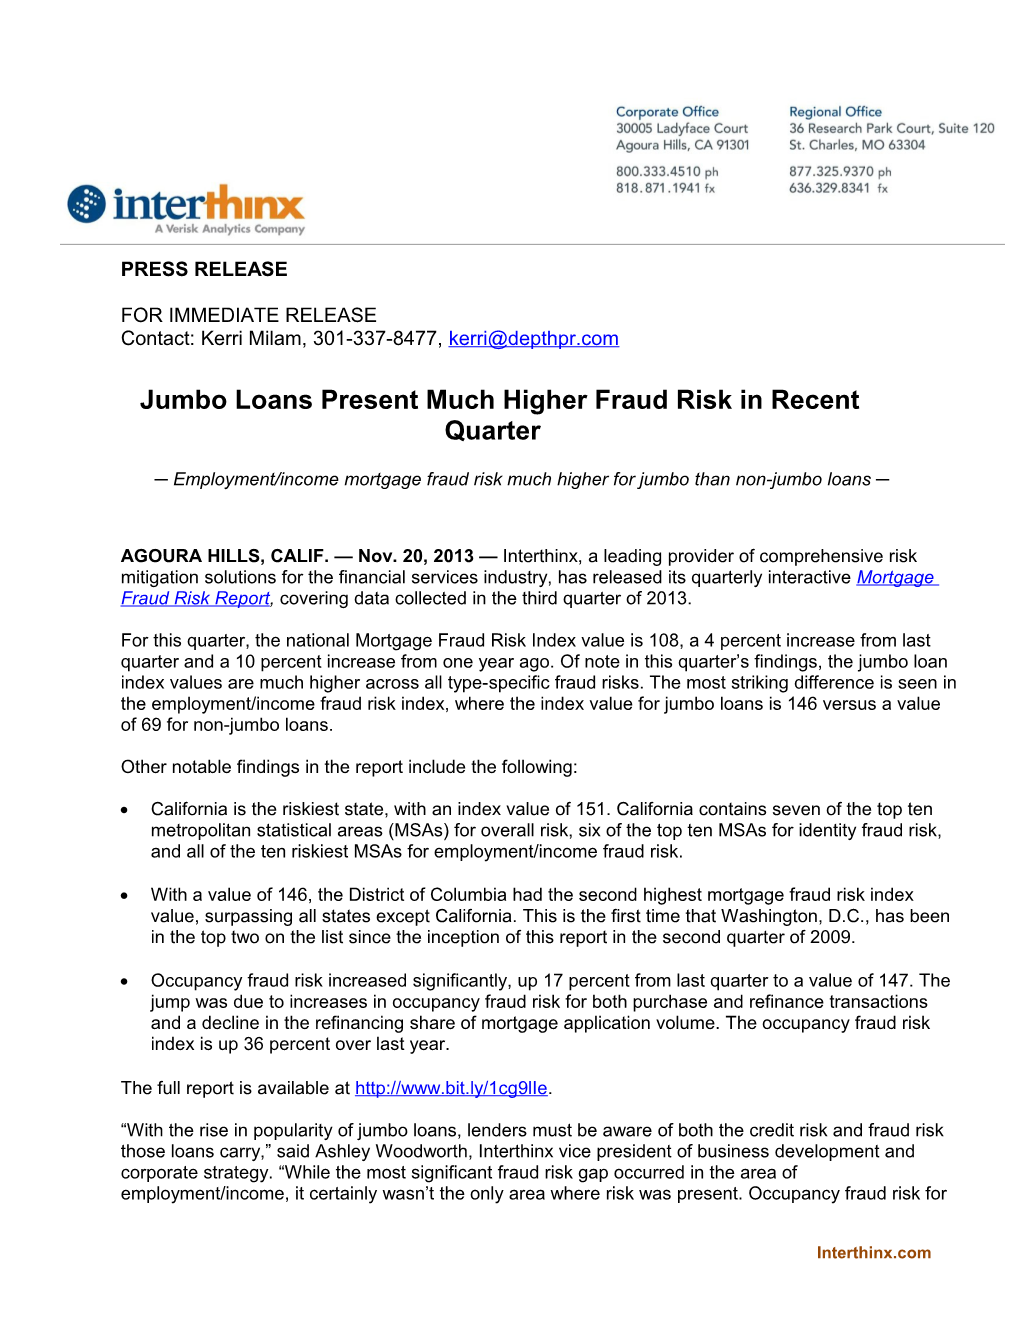 Jumbo Loans Present Much Higher Fraud Risk in Recent Quarter